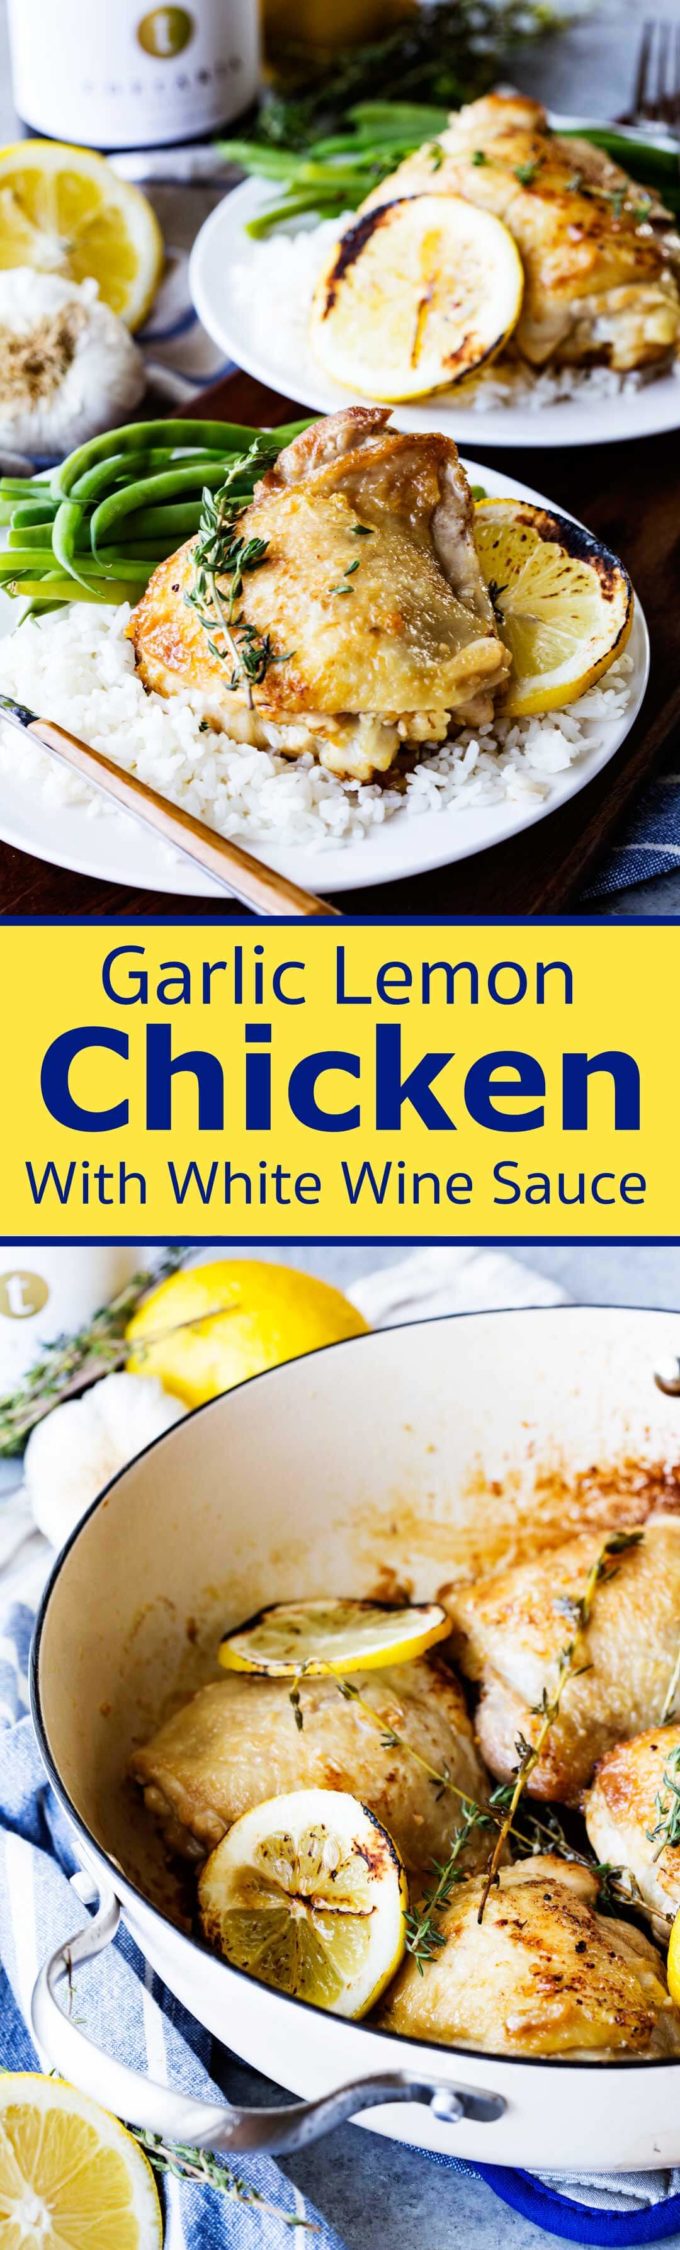 Skillet Garlic Lemon Chicken with White Wine Sauce - Easy Peasy Meals